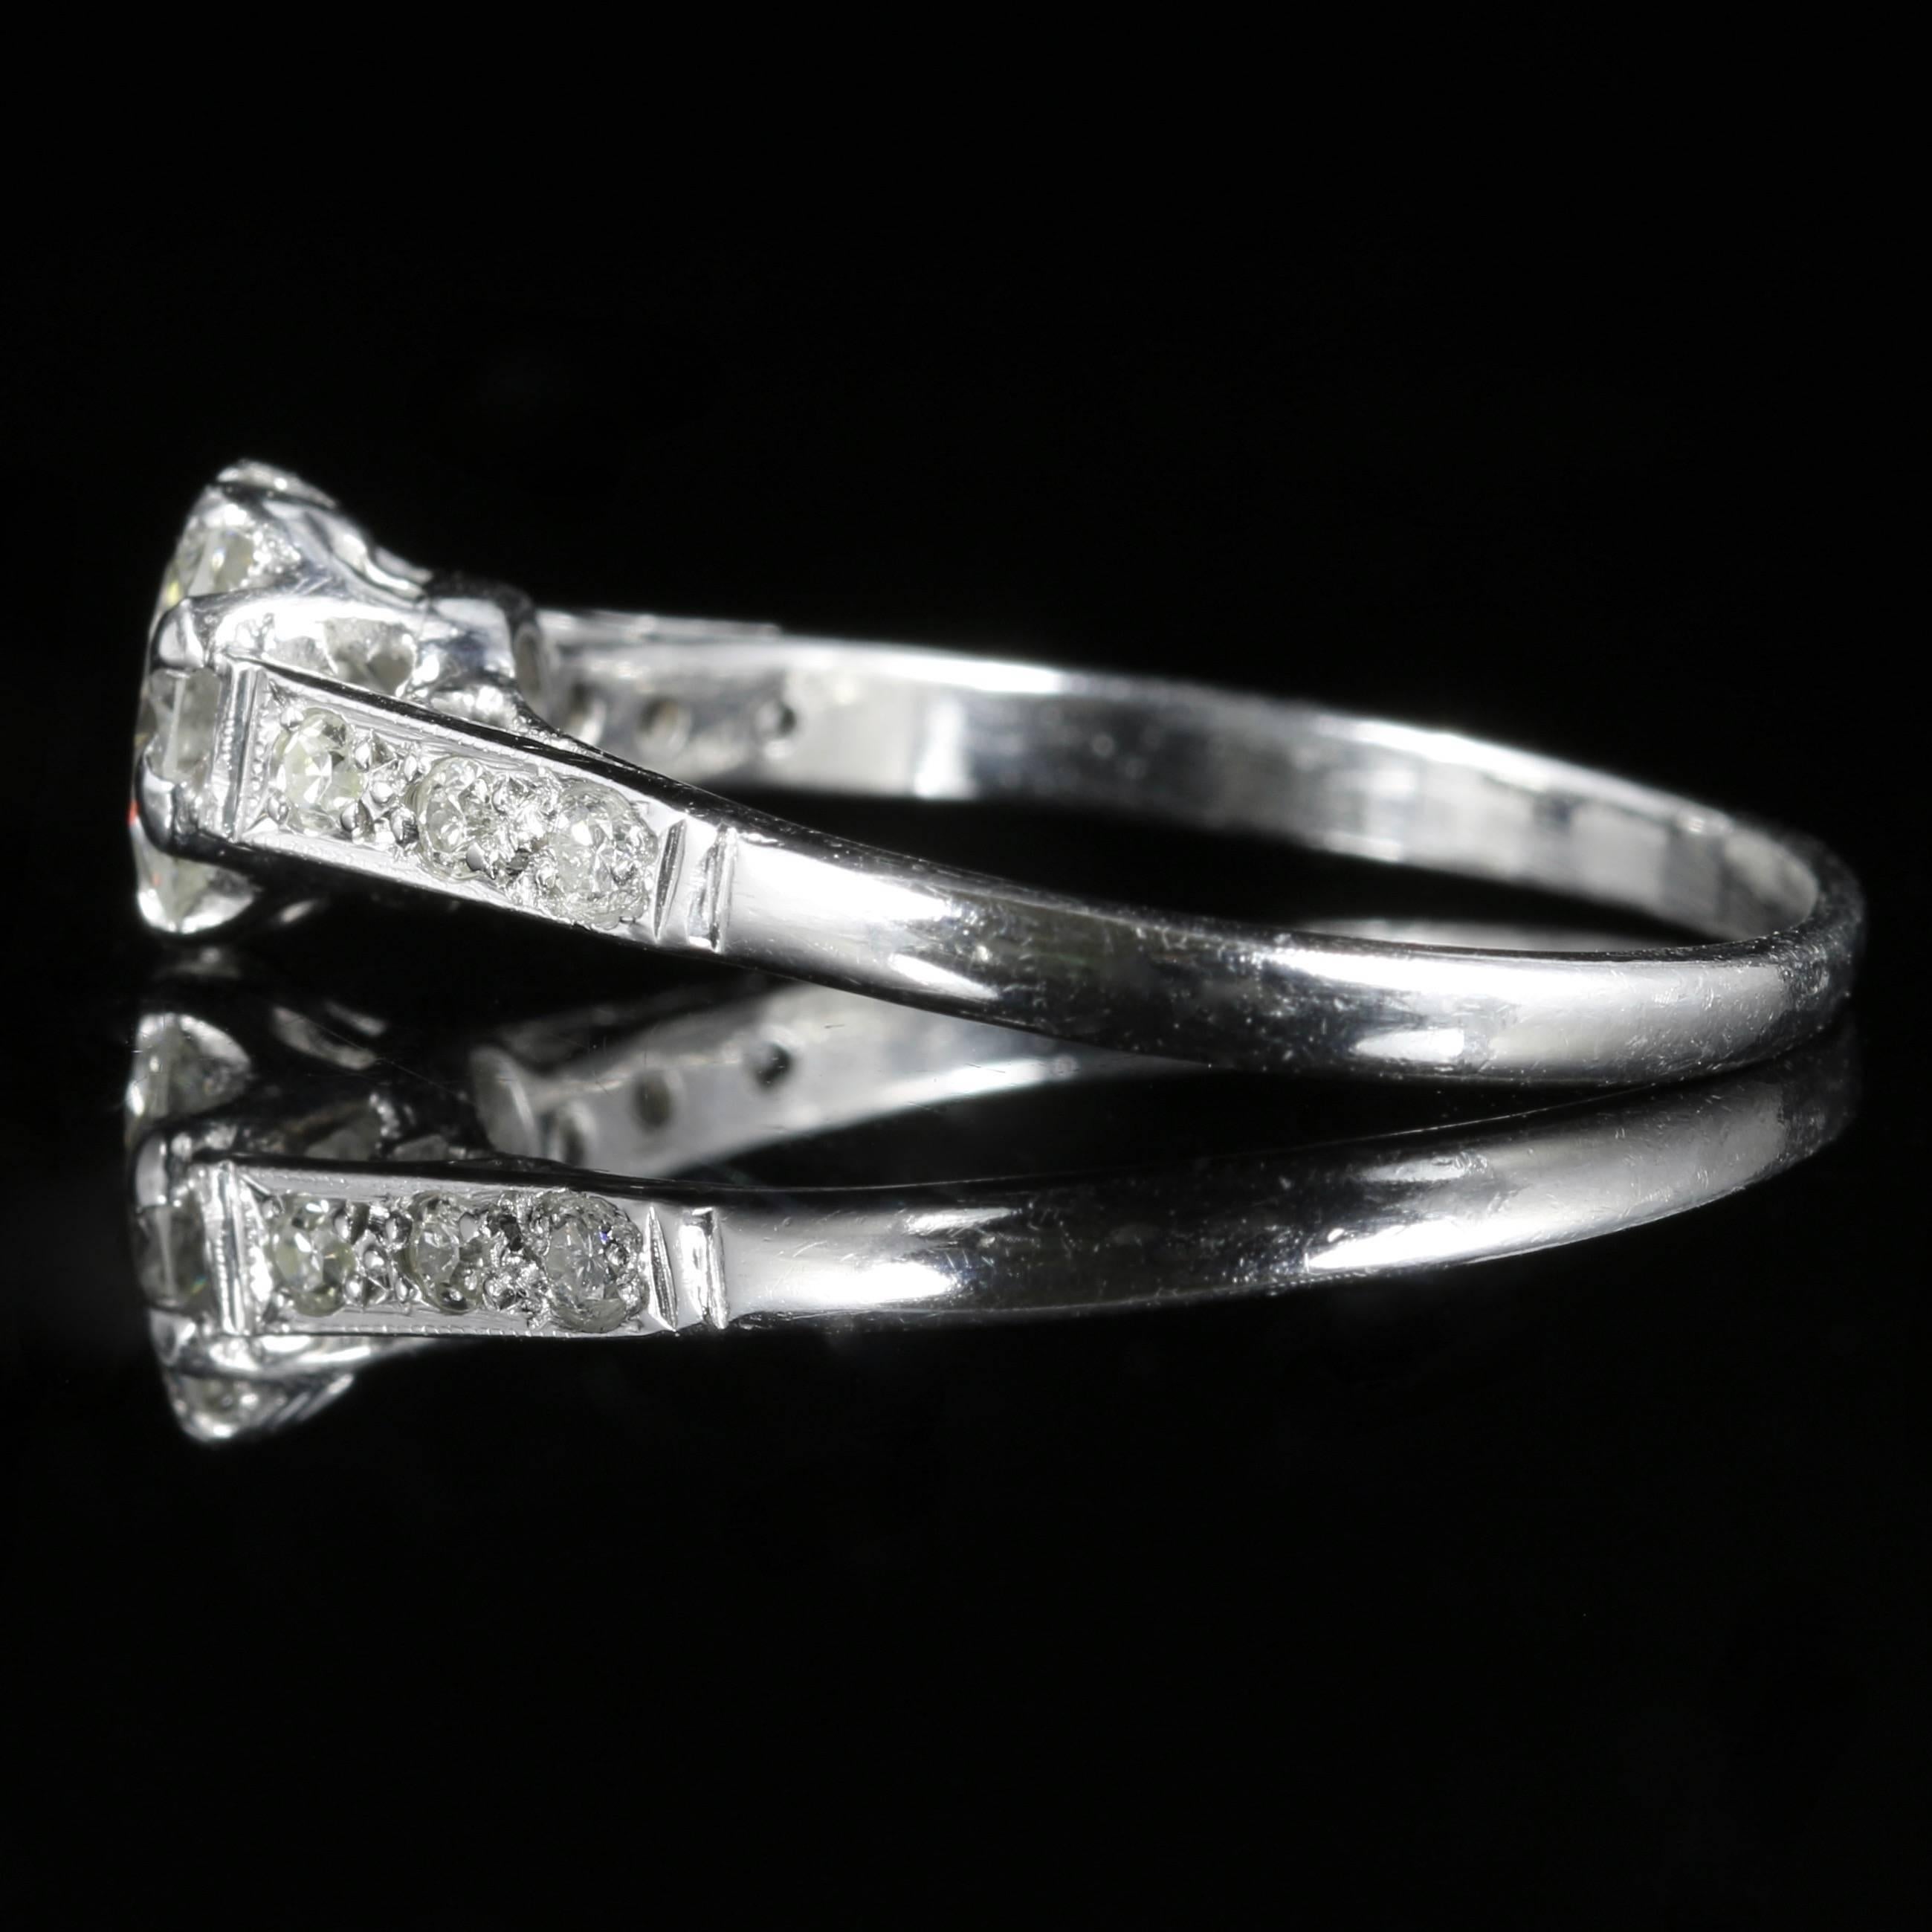 Antique Edwardian Diamond Solitaire circa 1910 Platinum Engagement Ring For Sale 1